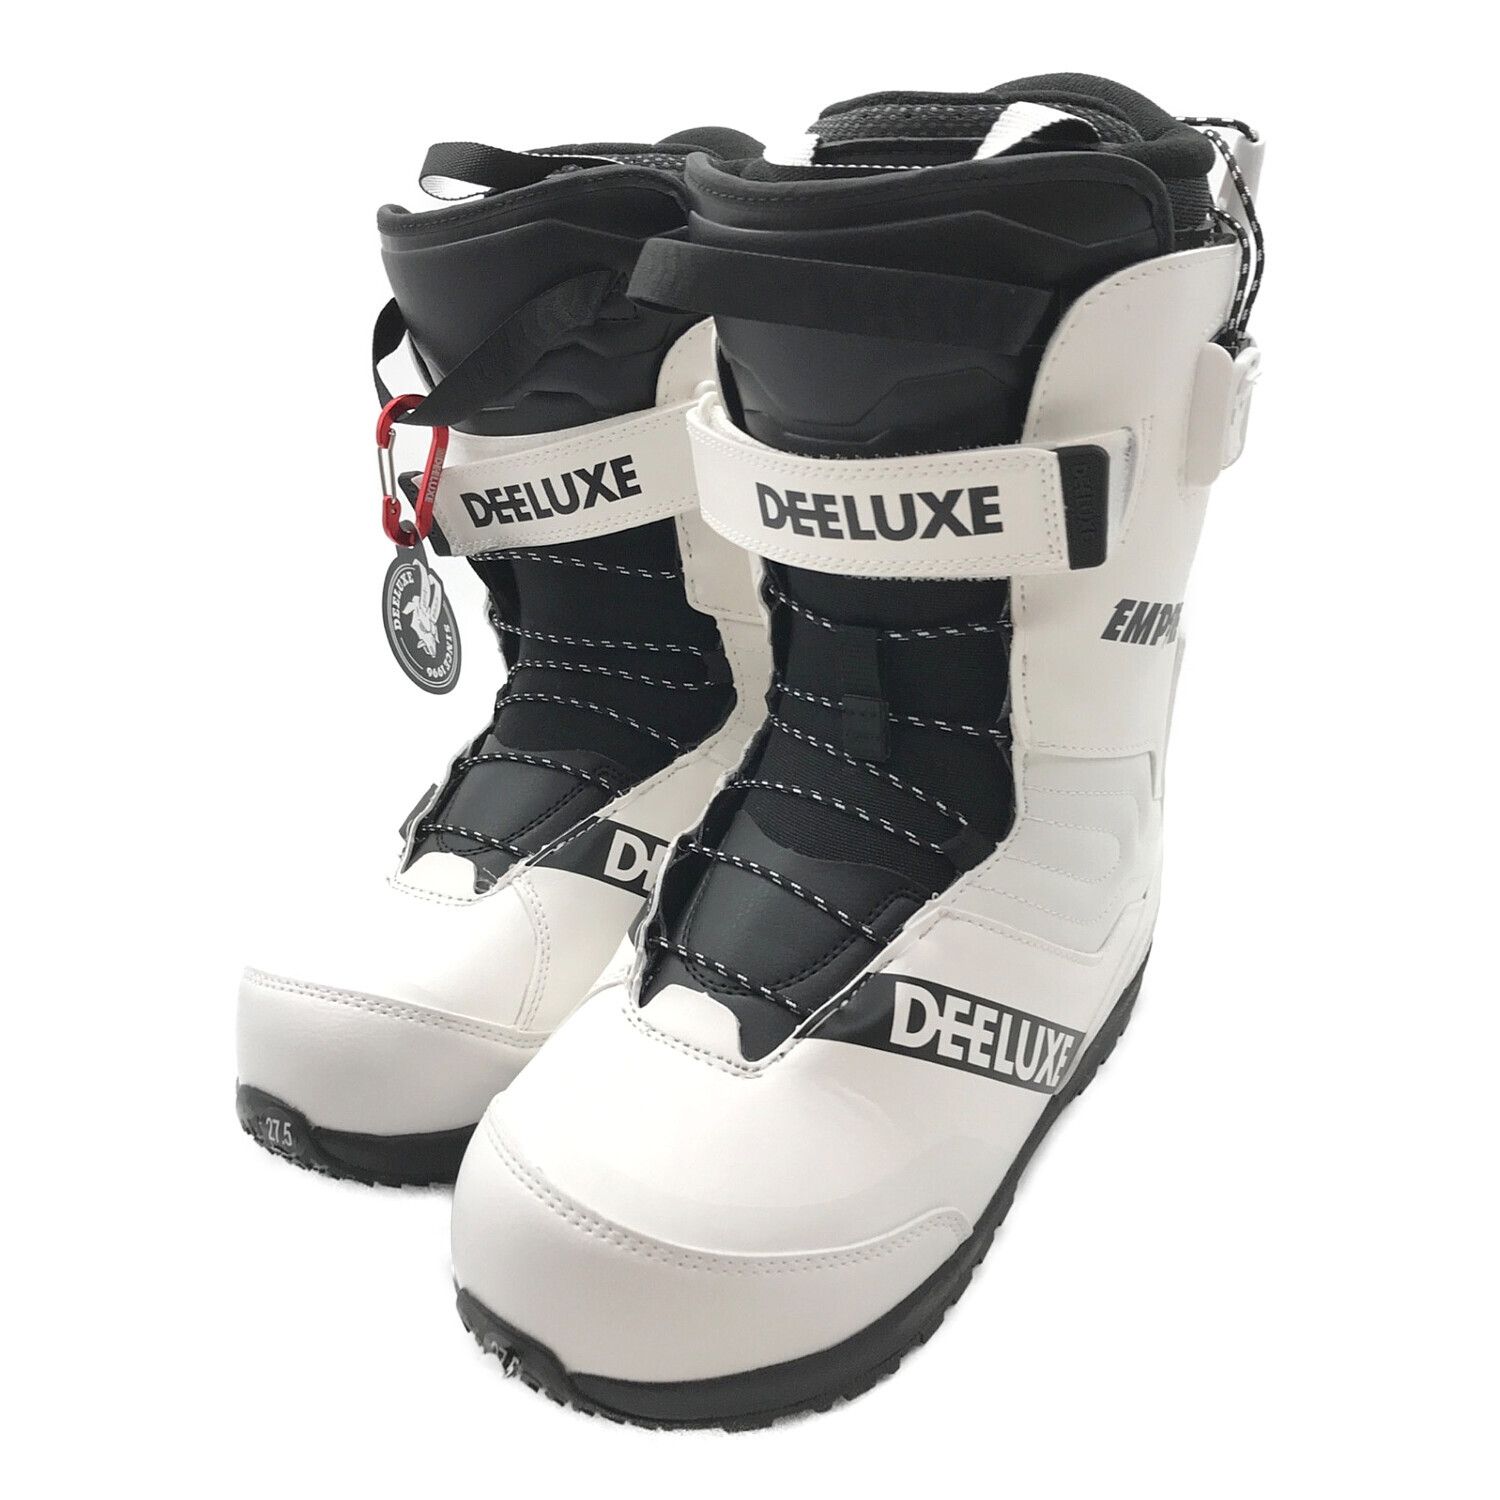 DEELUXE (ディーラックス) スノーボードブーツ メンズ SIZE 27.5cm